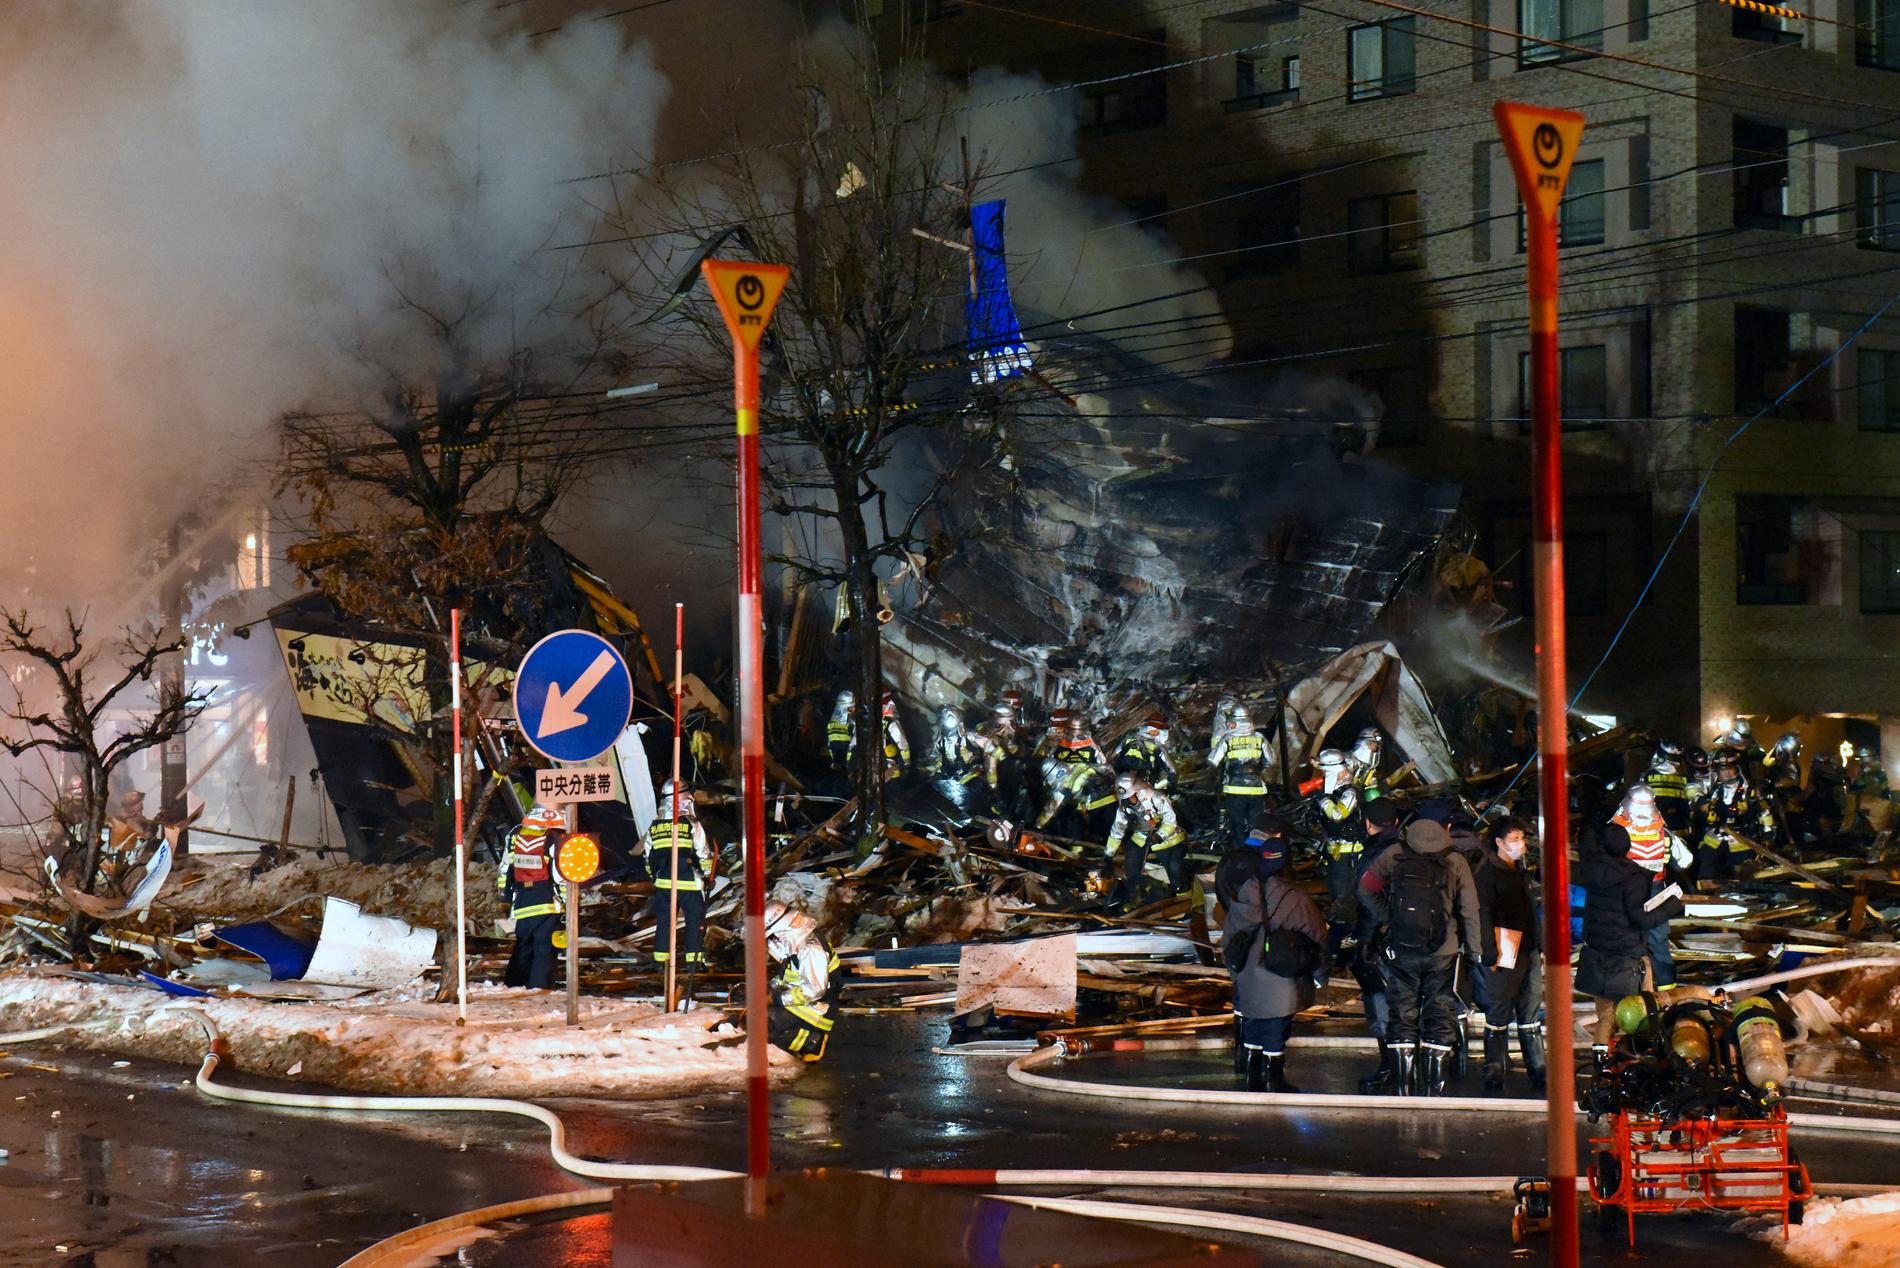 Minst 20 personer uppges ha skadats i explosionen i Sapporo. 